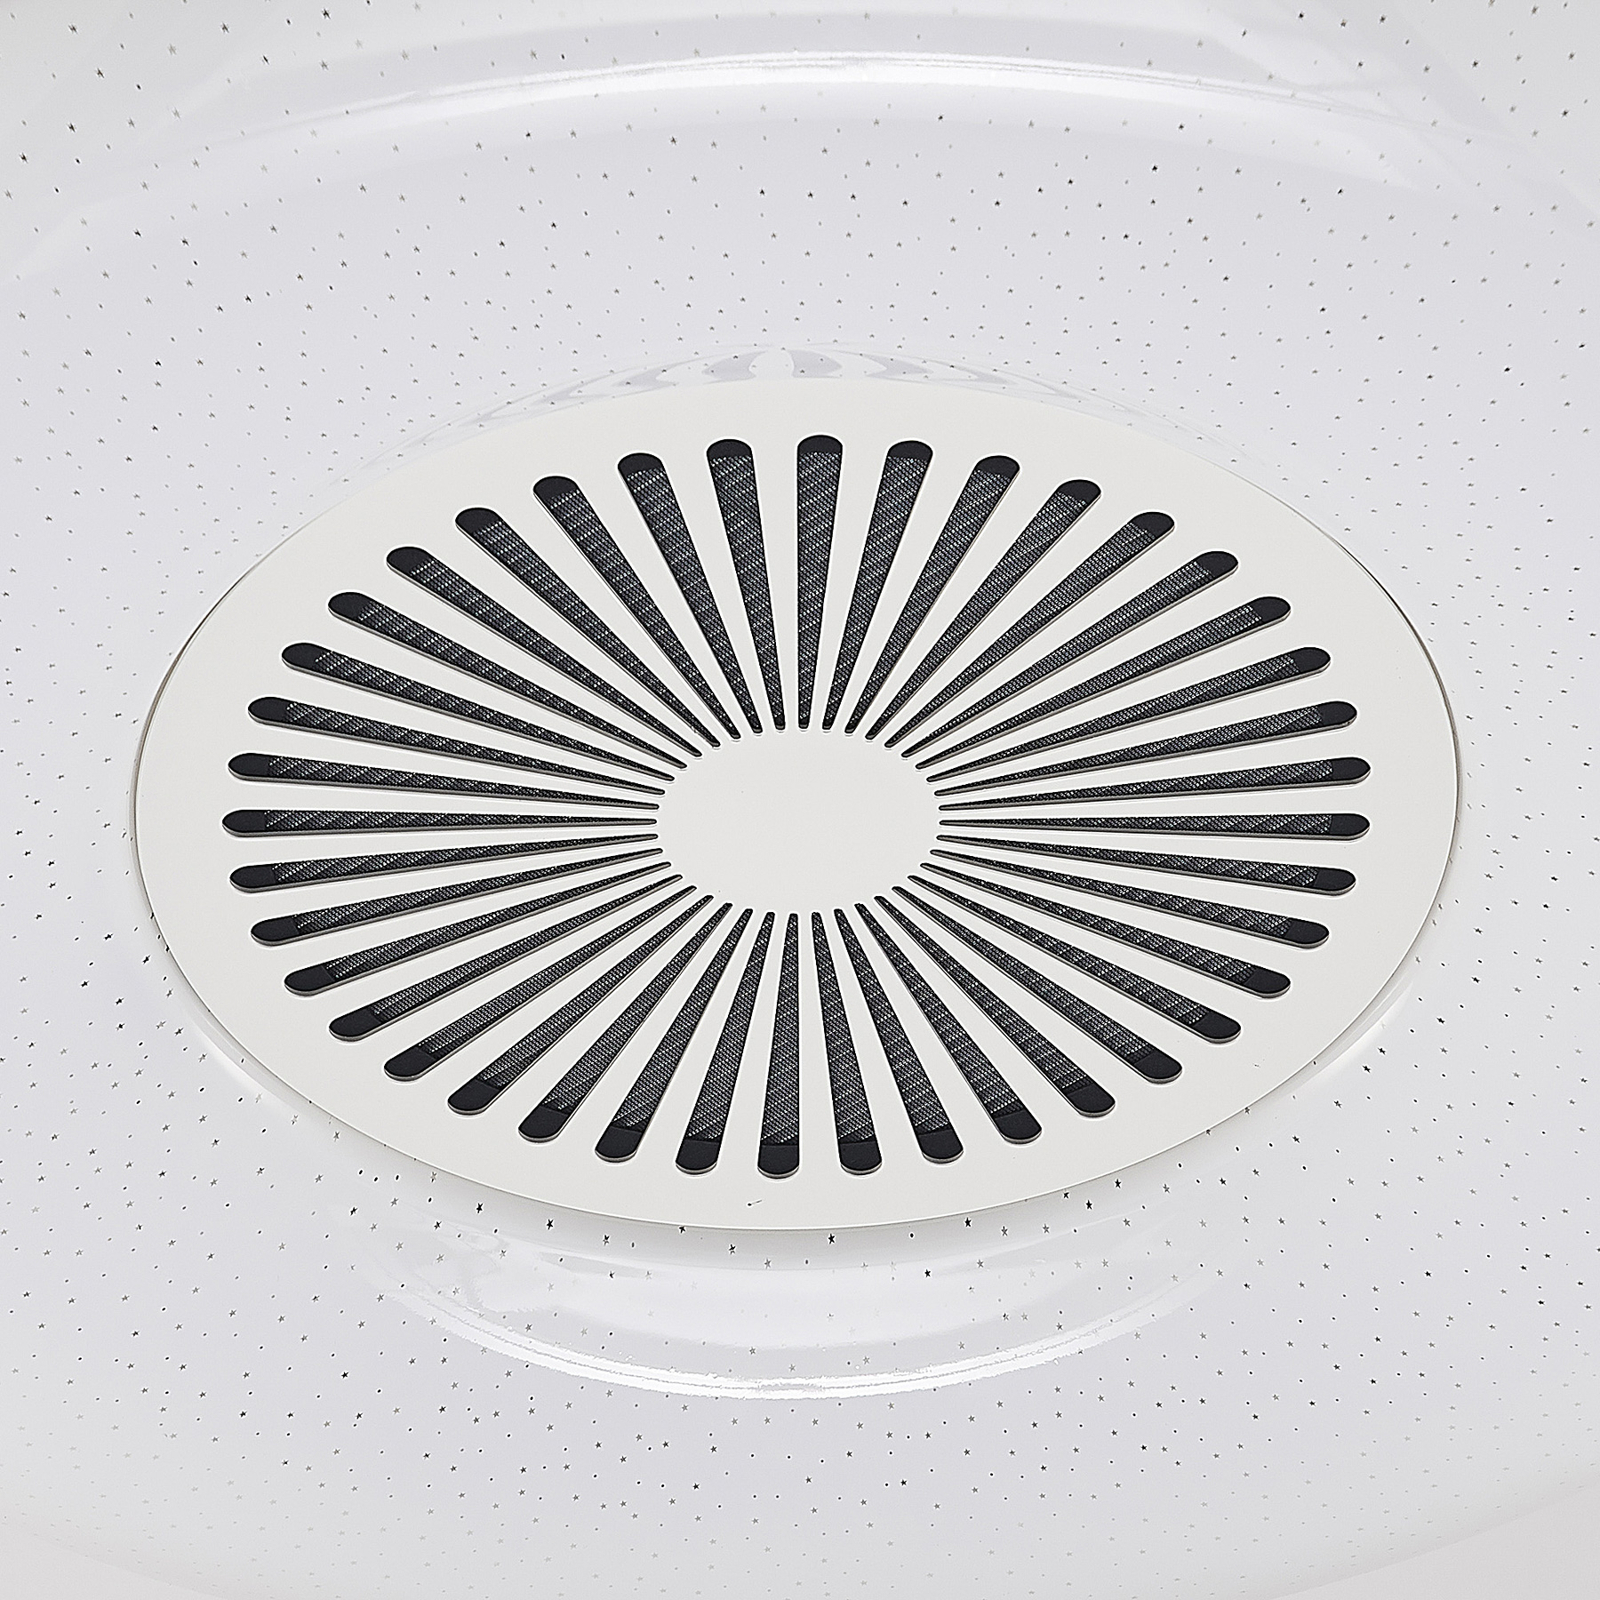 Starluna Myrte LED stropní ventilátor, čistička